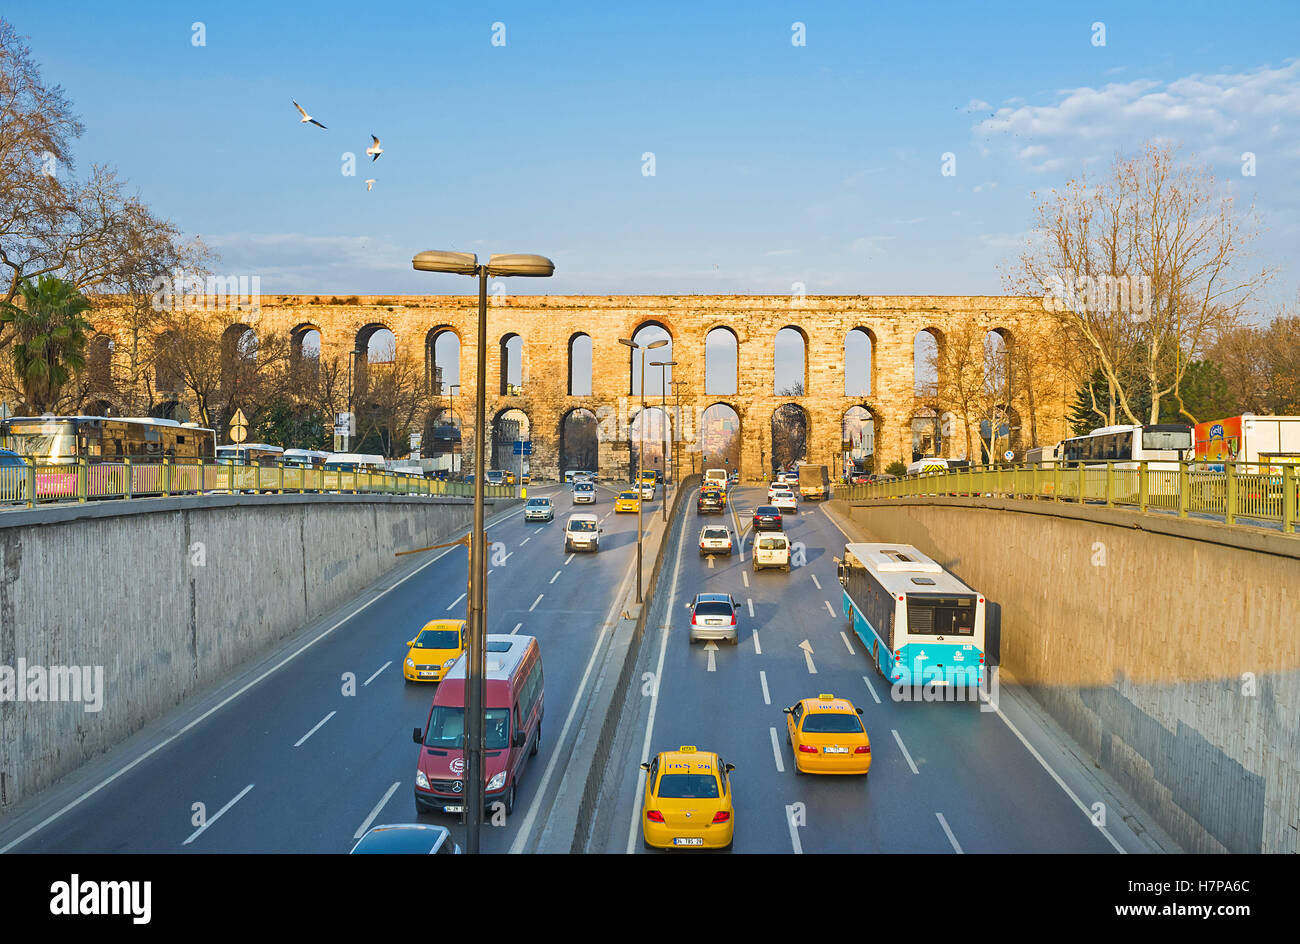 Le boulevard Ataturk passe sous les arcades de l'ancien aqueduc de Valens Banque D'Images